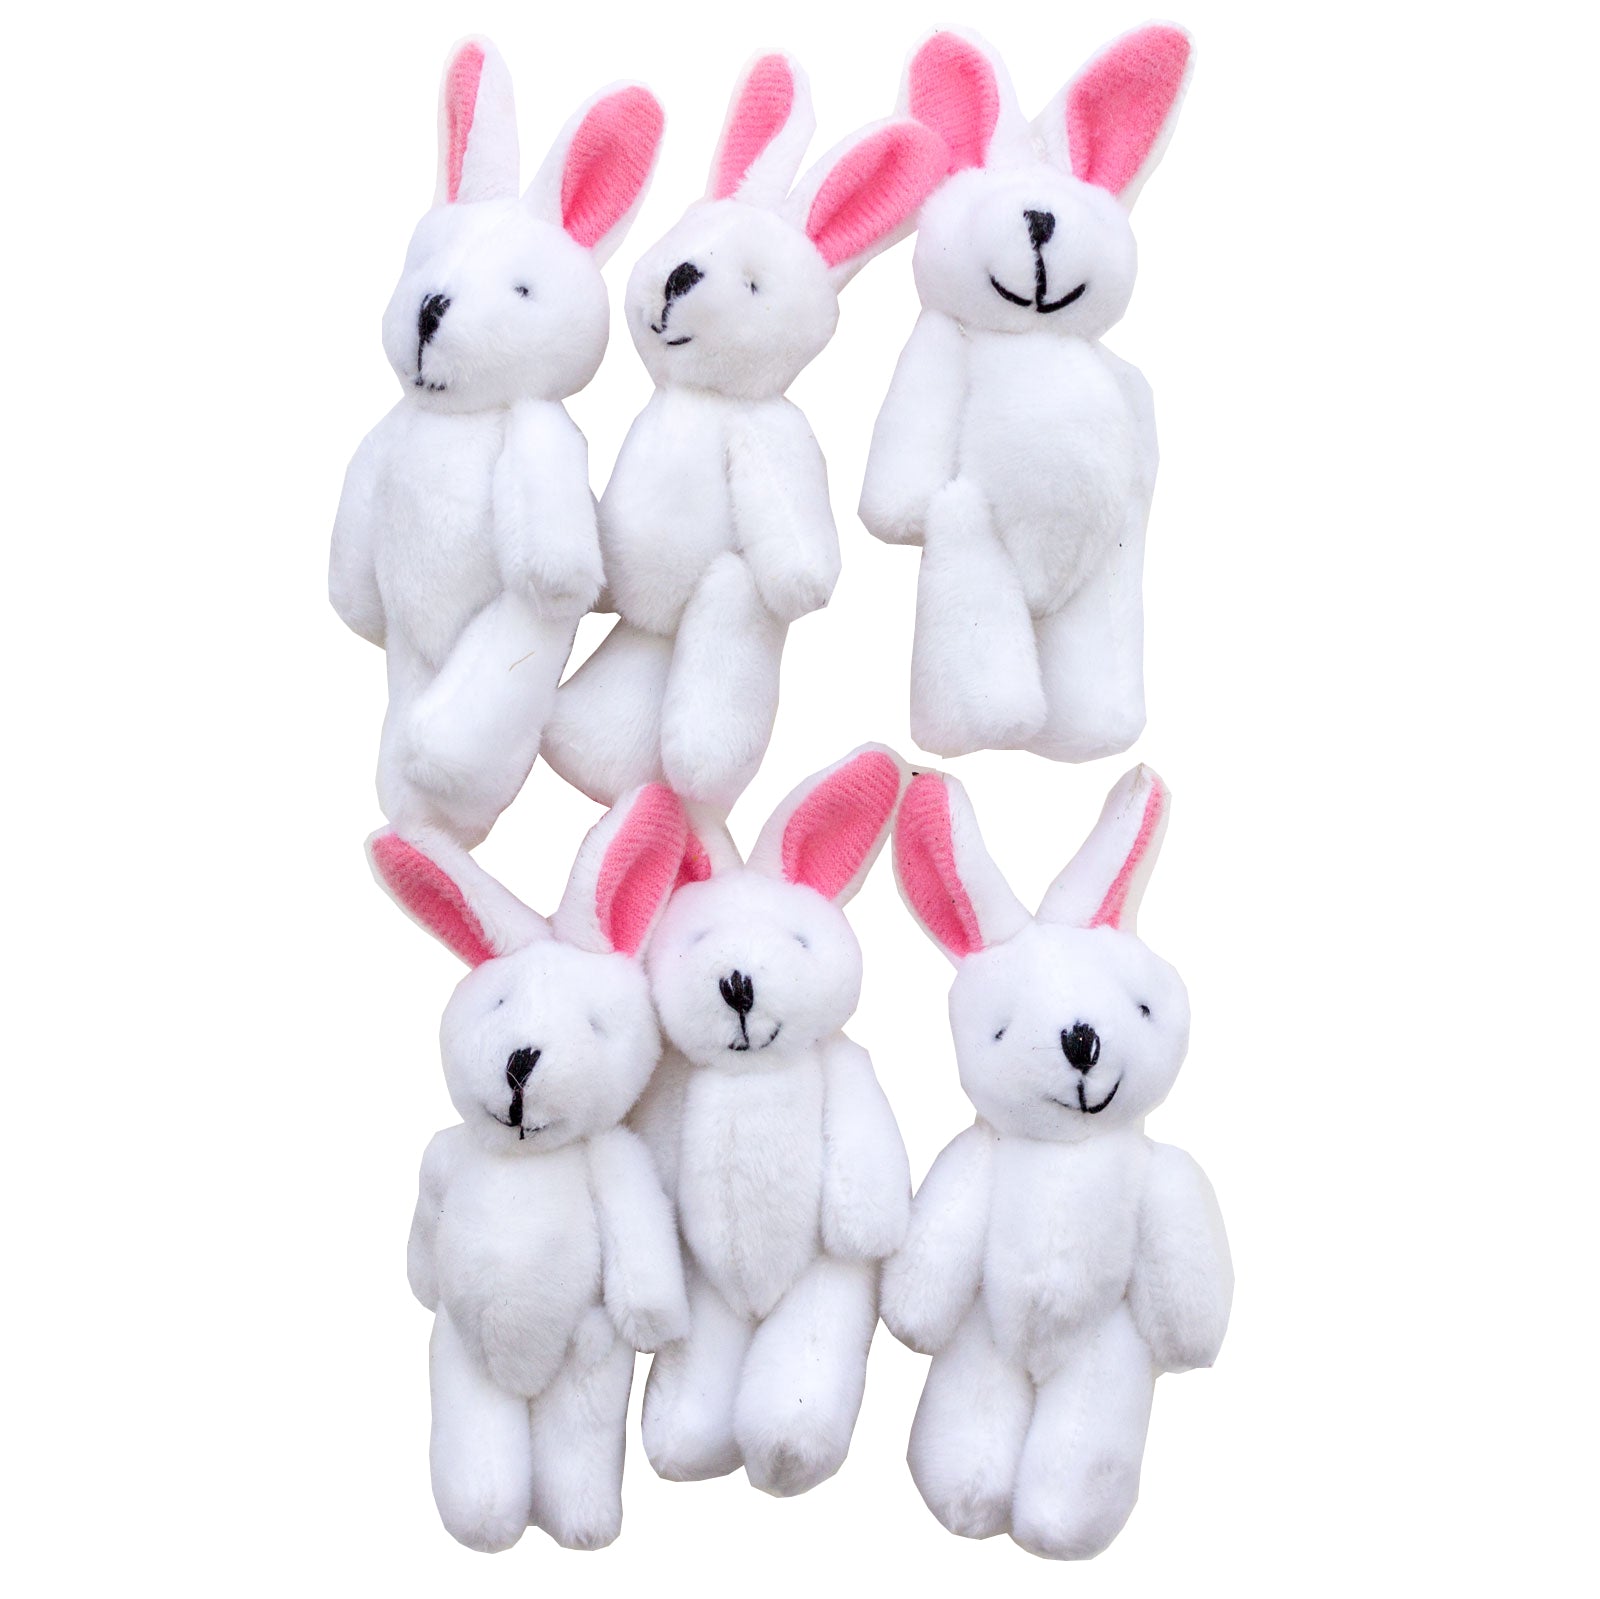 Small Rabbits X 35 - Cute Soft Adorable